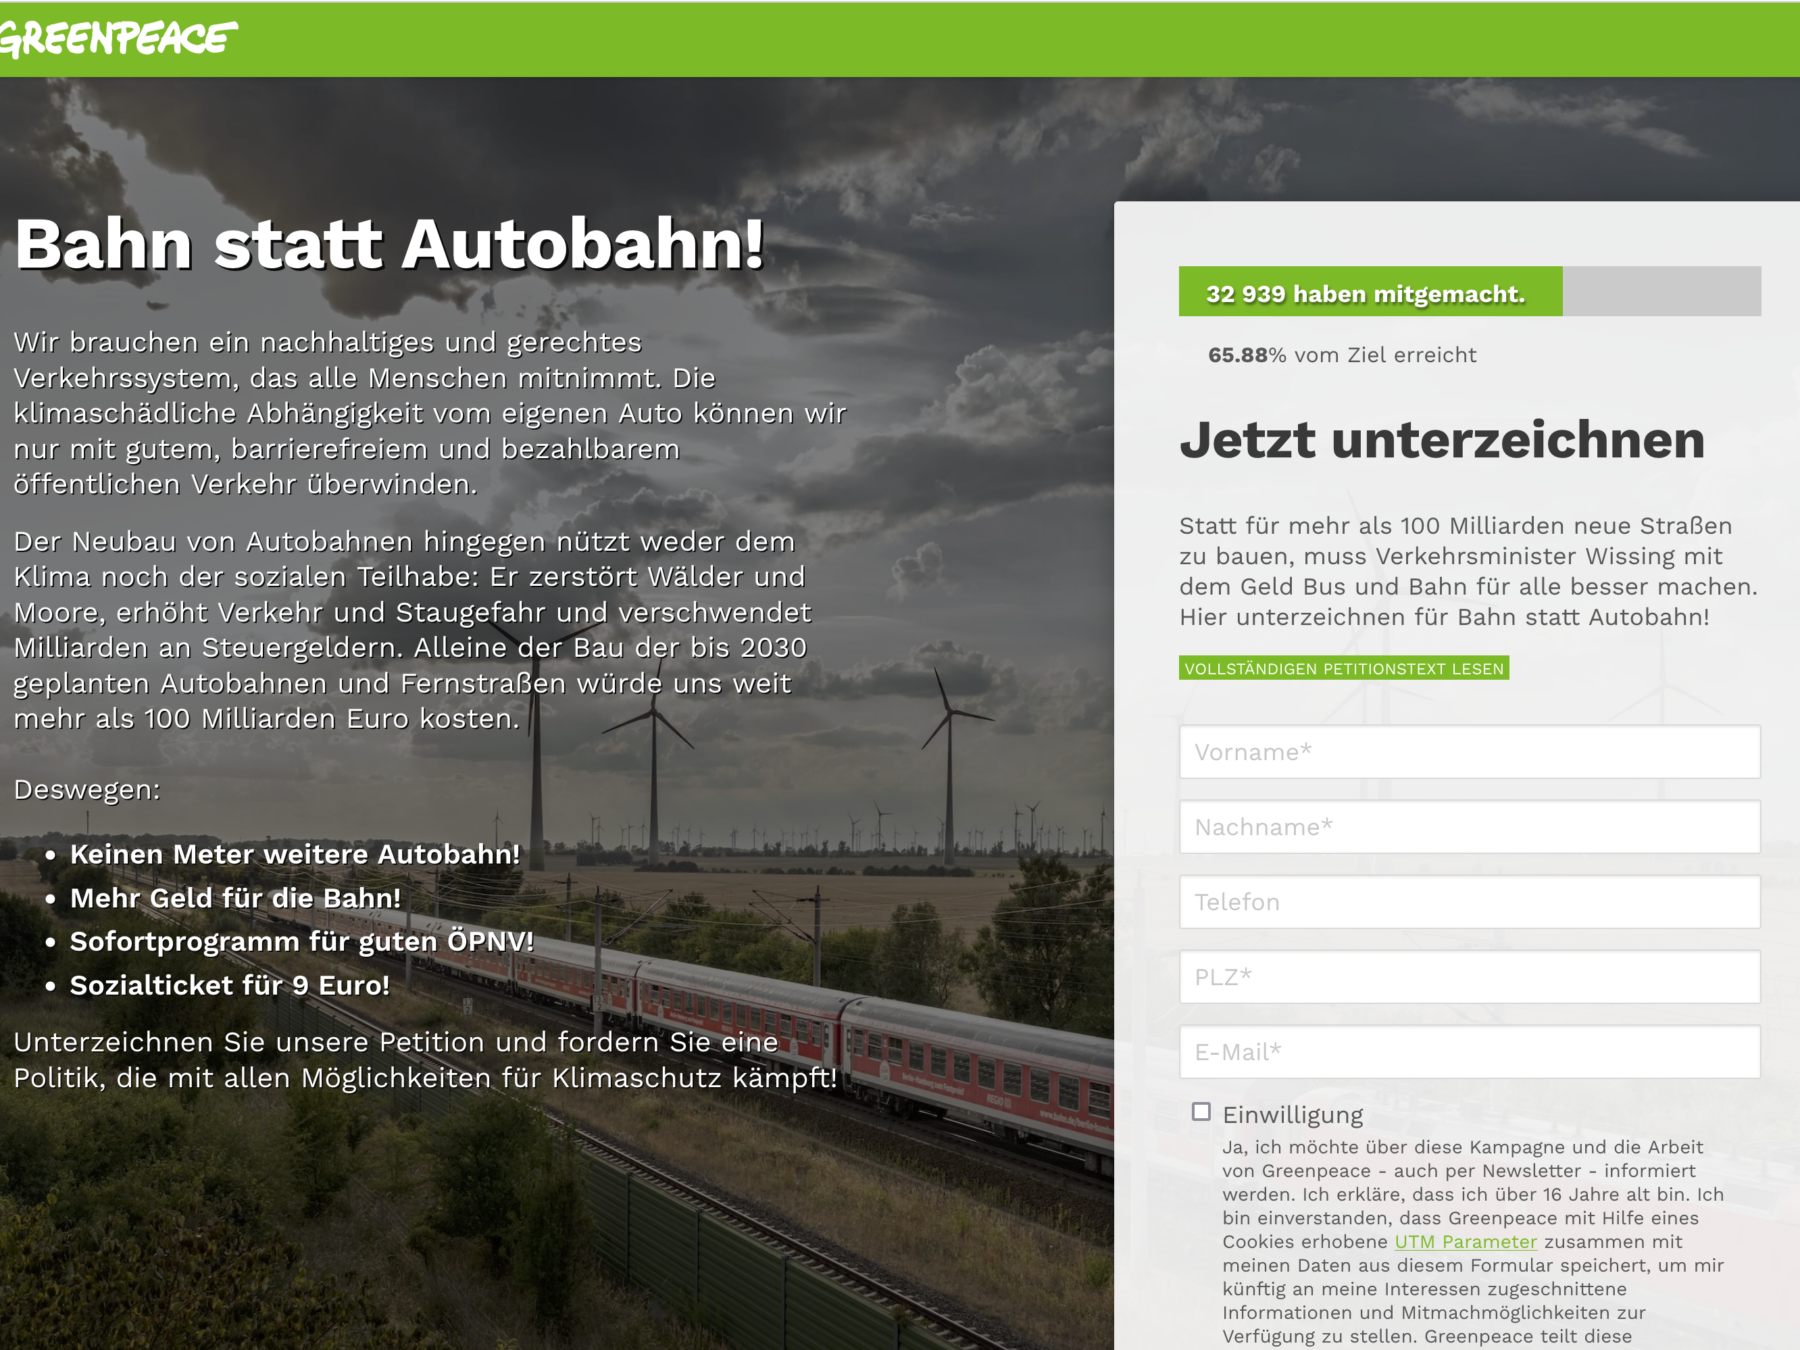 Greenpeace-Petition "Bahn statt Autobahn"